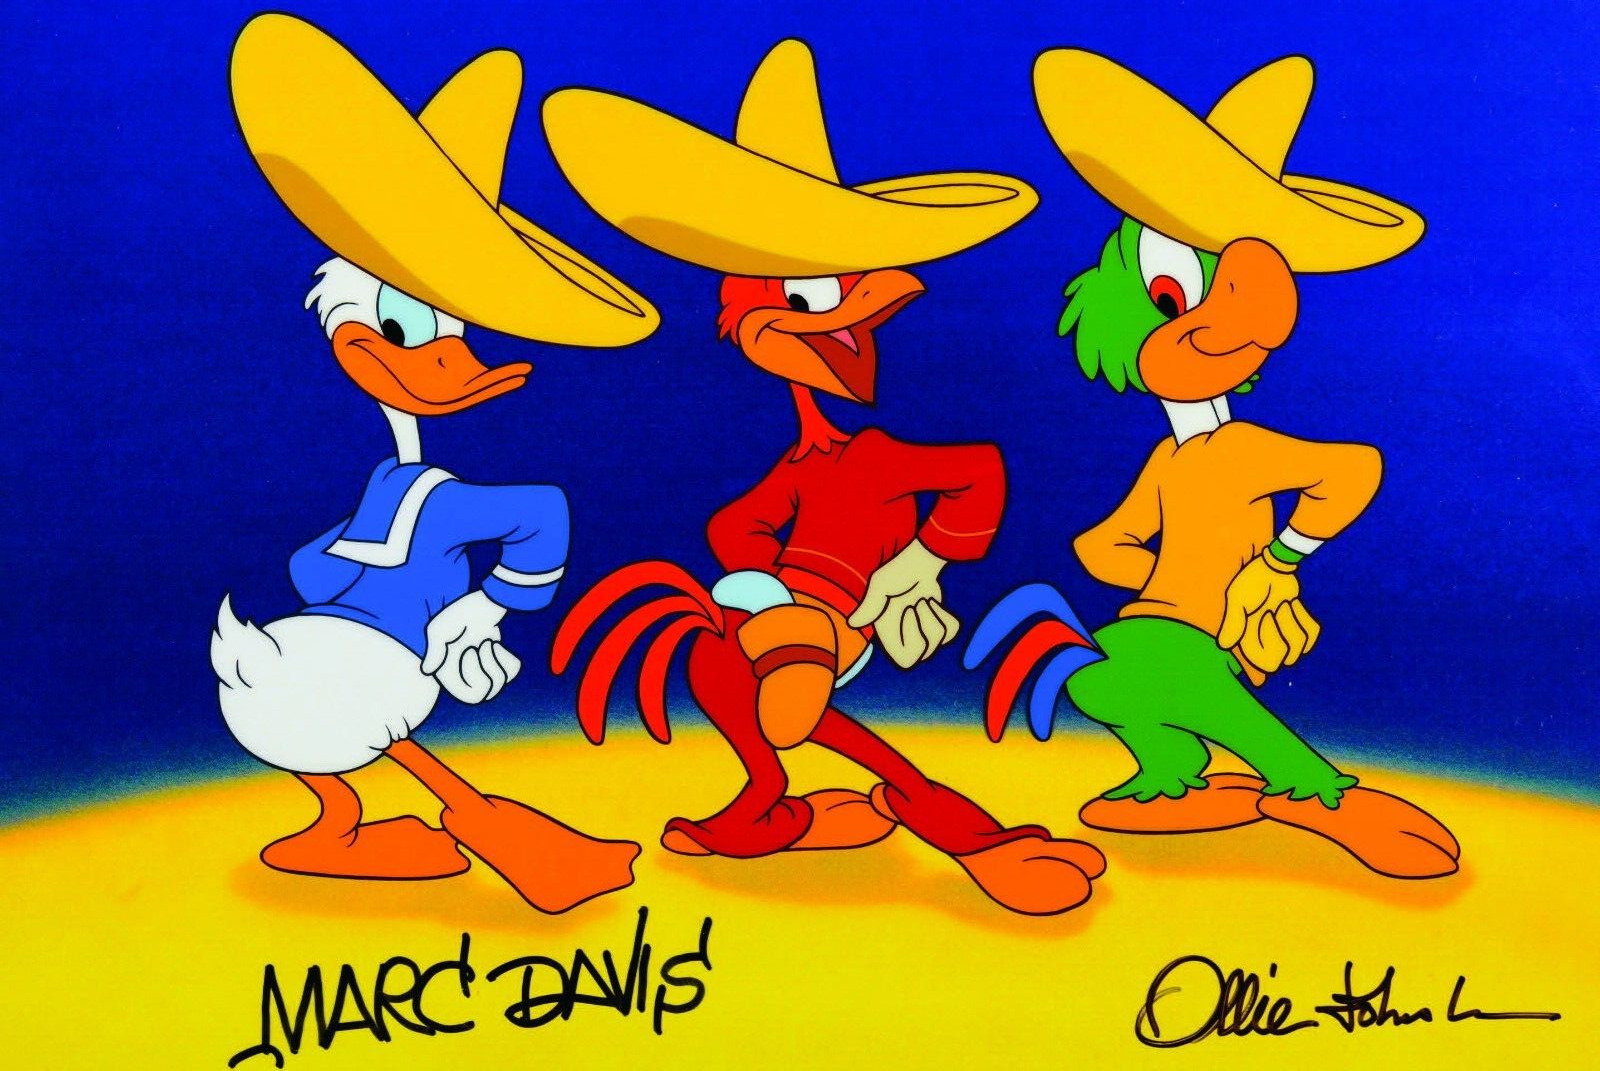  Panchito Pistoles José Carioca Donald Duck Three Caballeros Poster Print